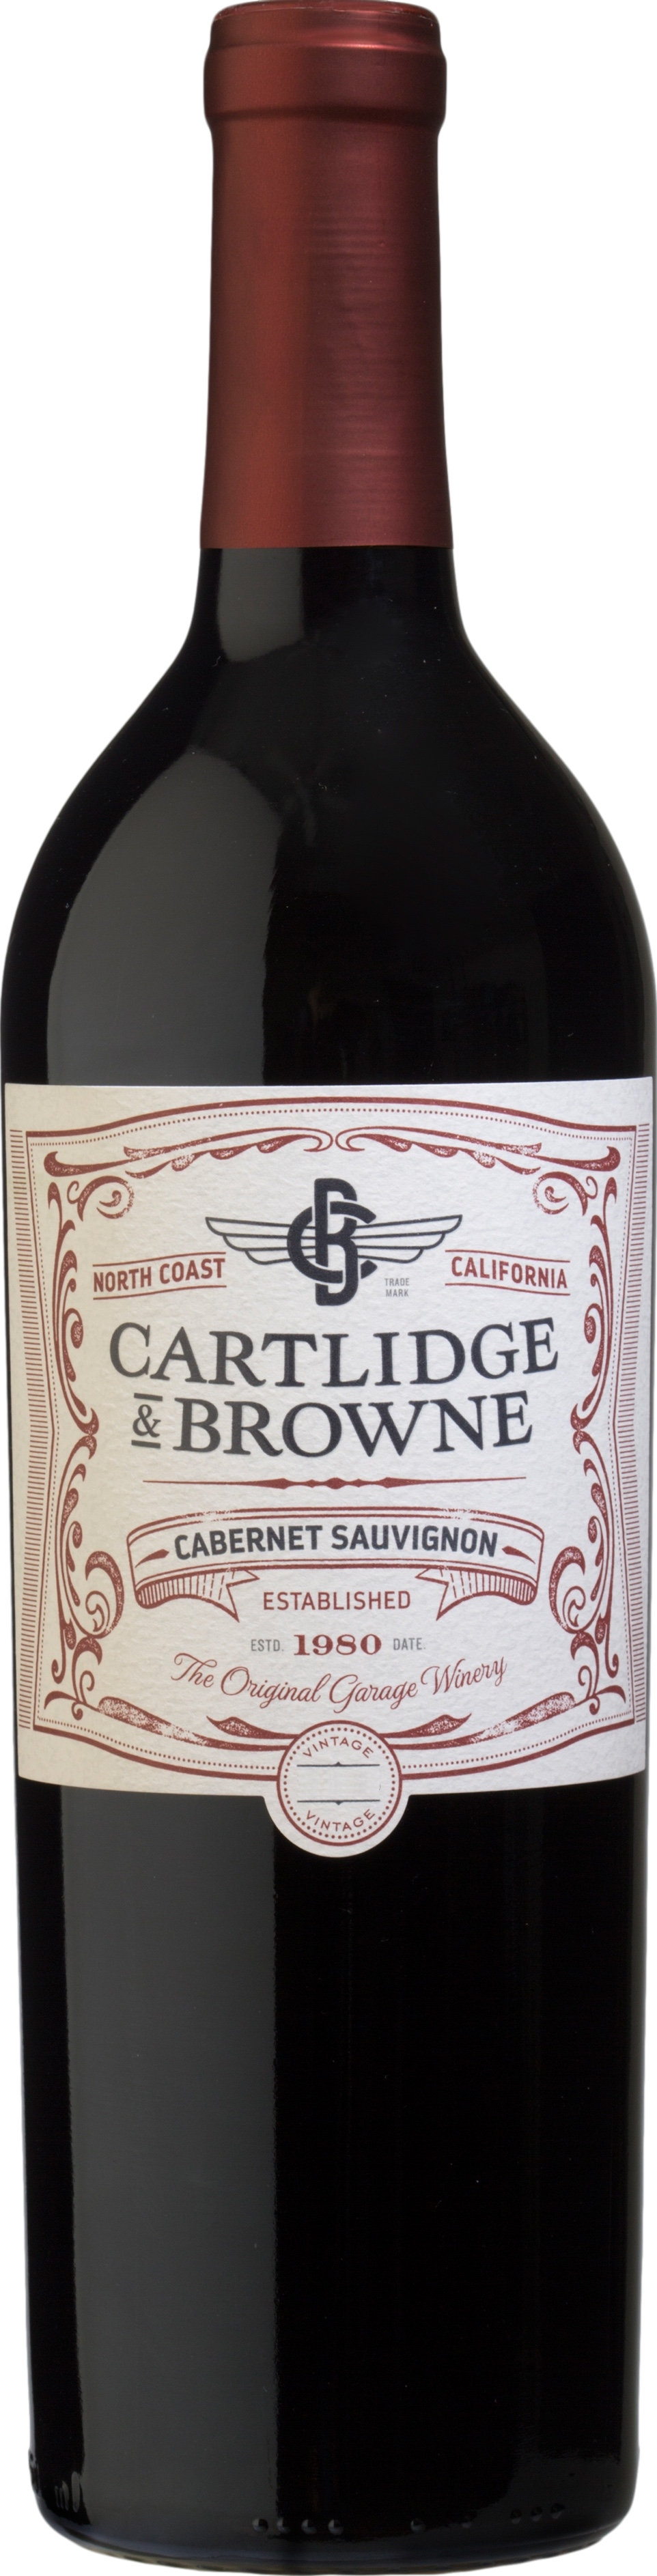 Cartlidge & Browne Cabernet Sauvignon 2018